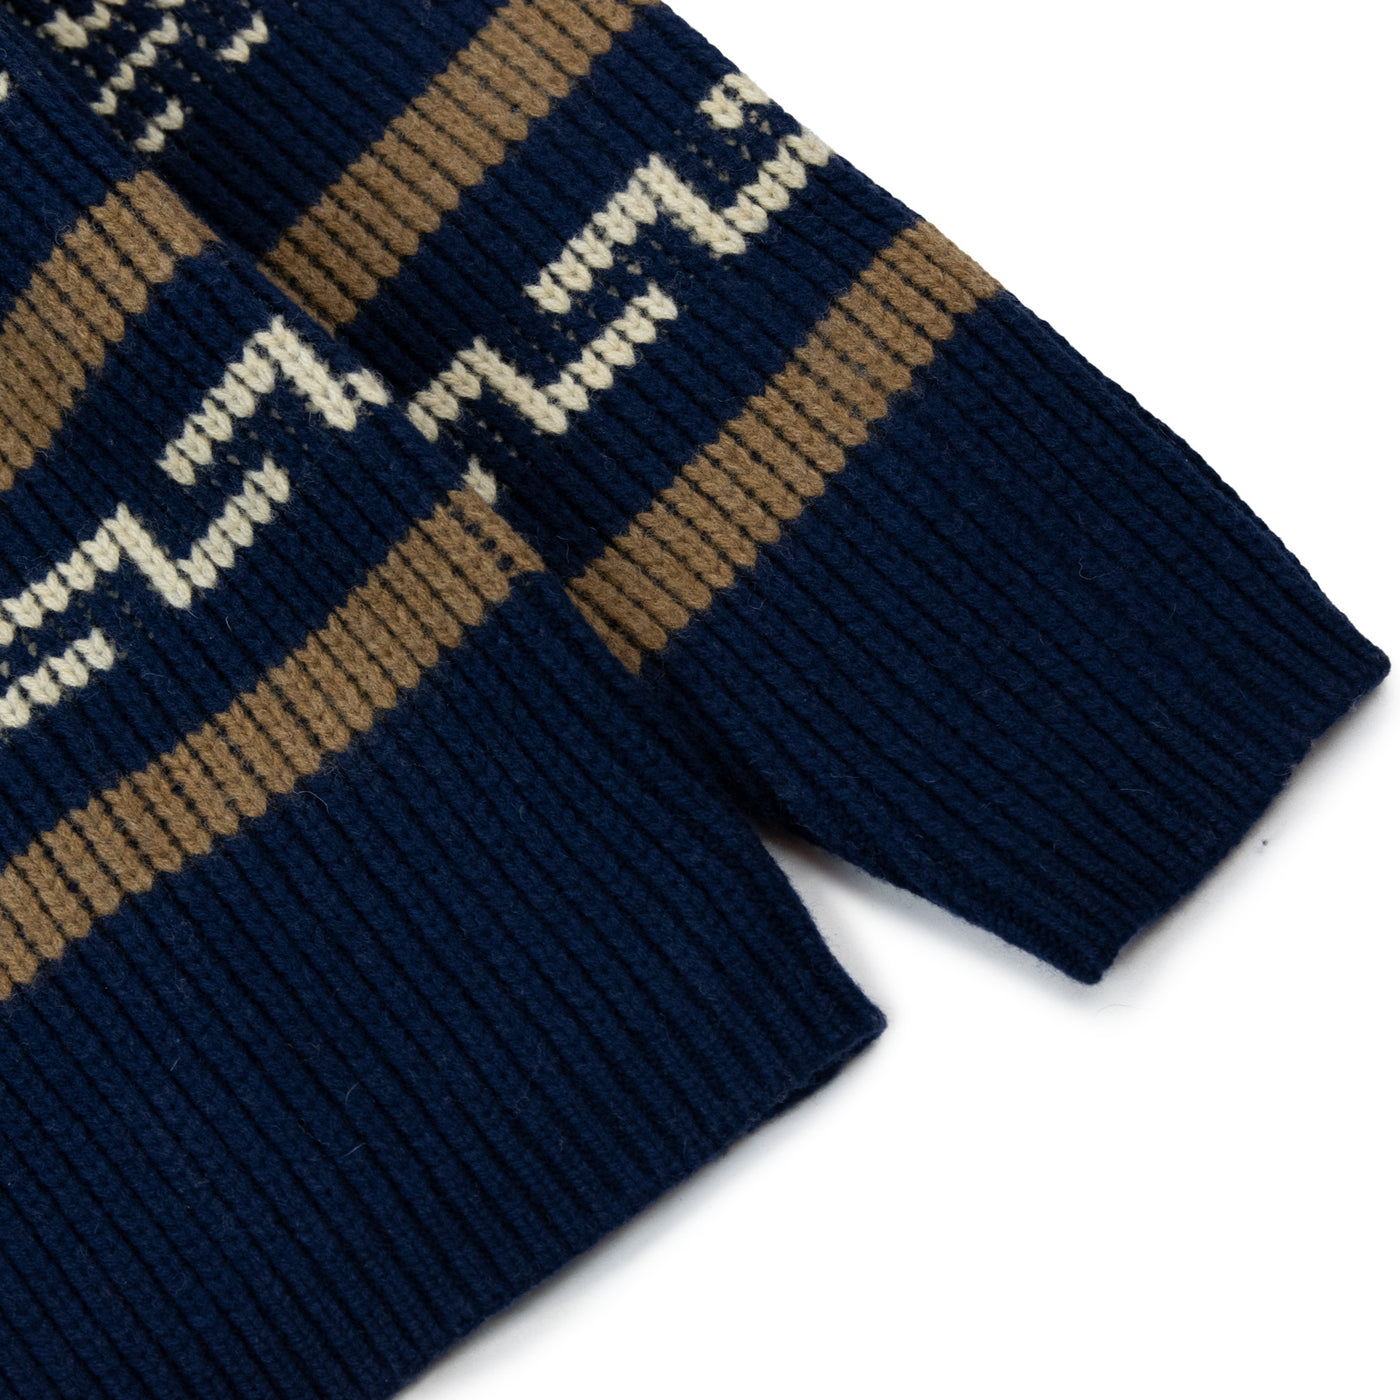 Pendleton Original Westerley Lambswool Cardigan Sweater Navy / Brown Cuff